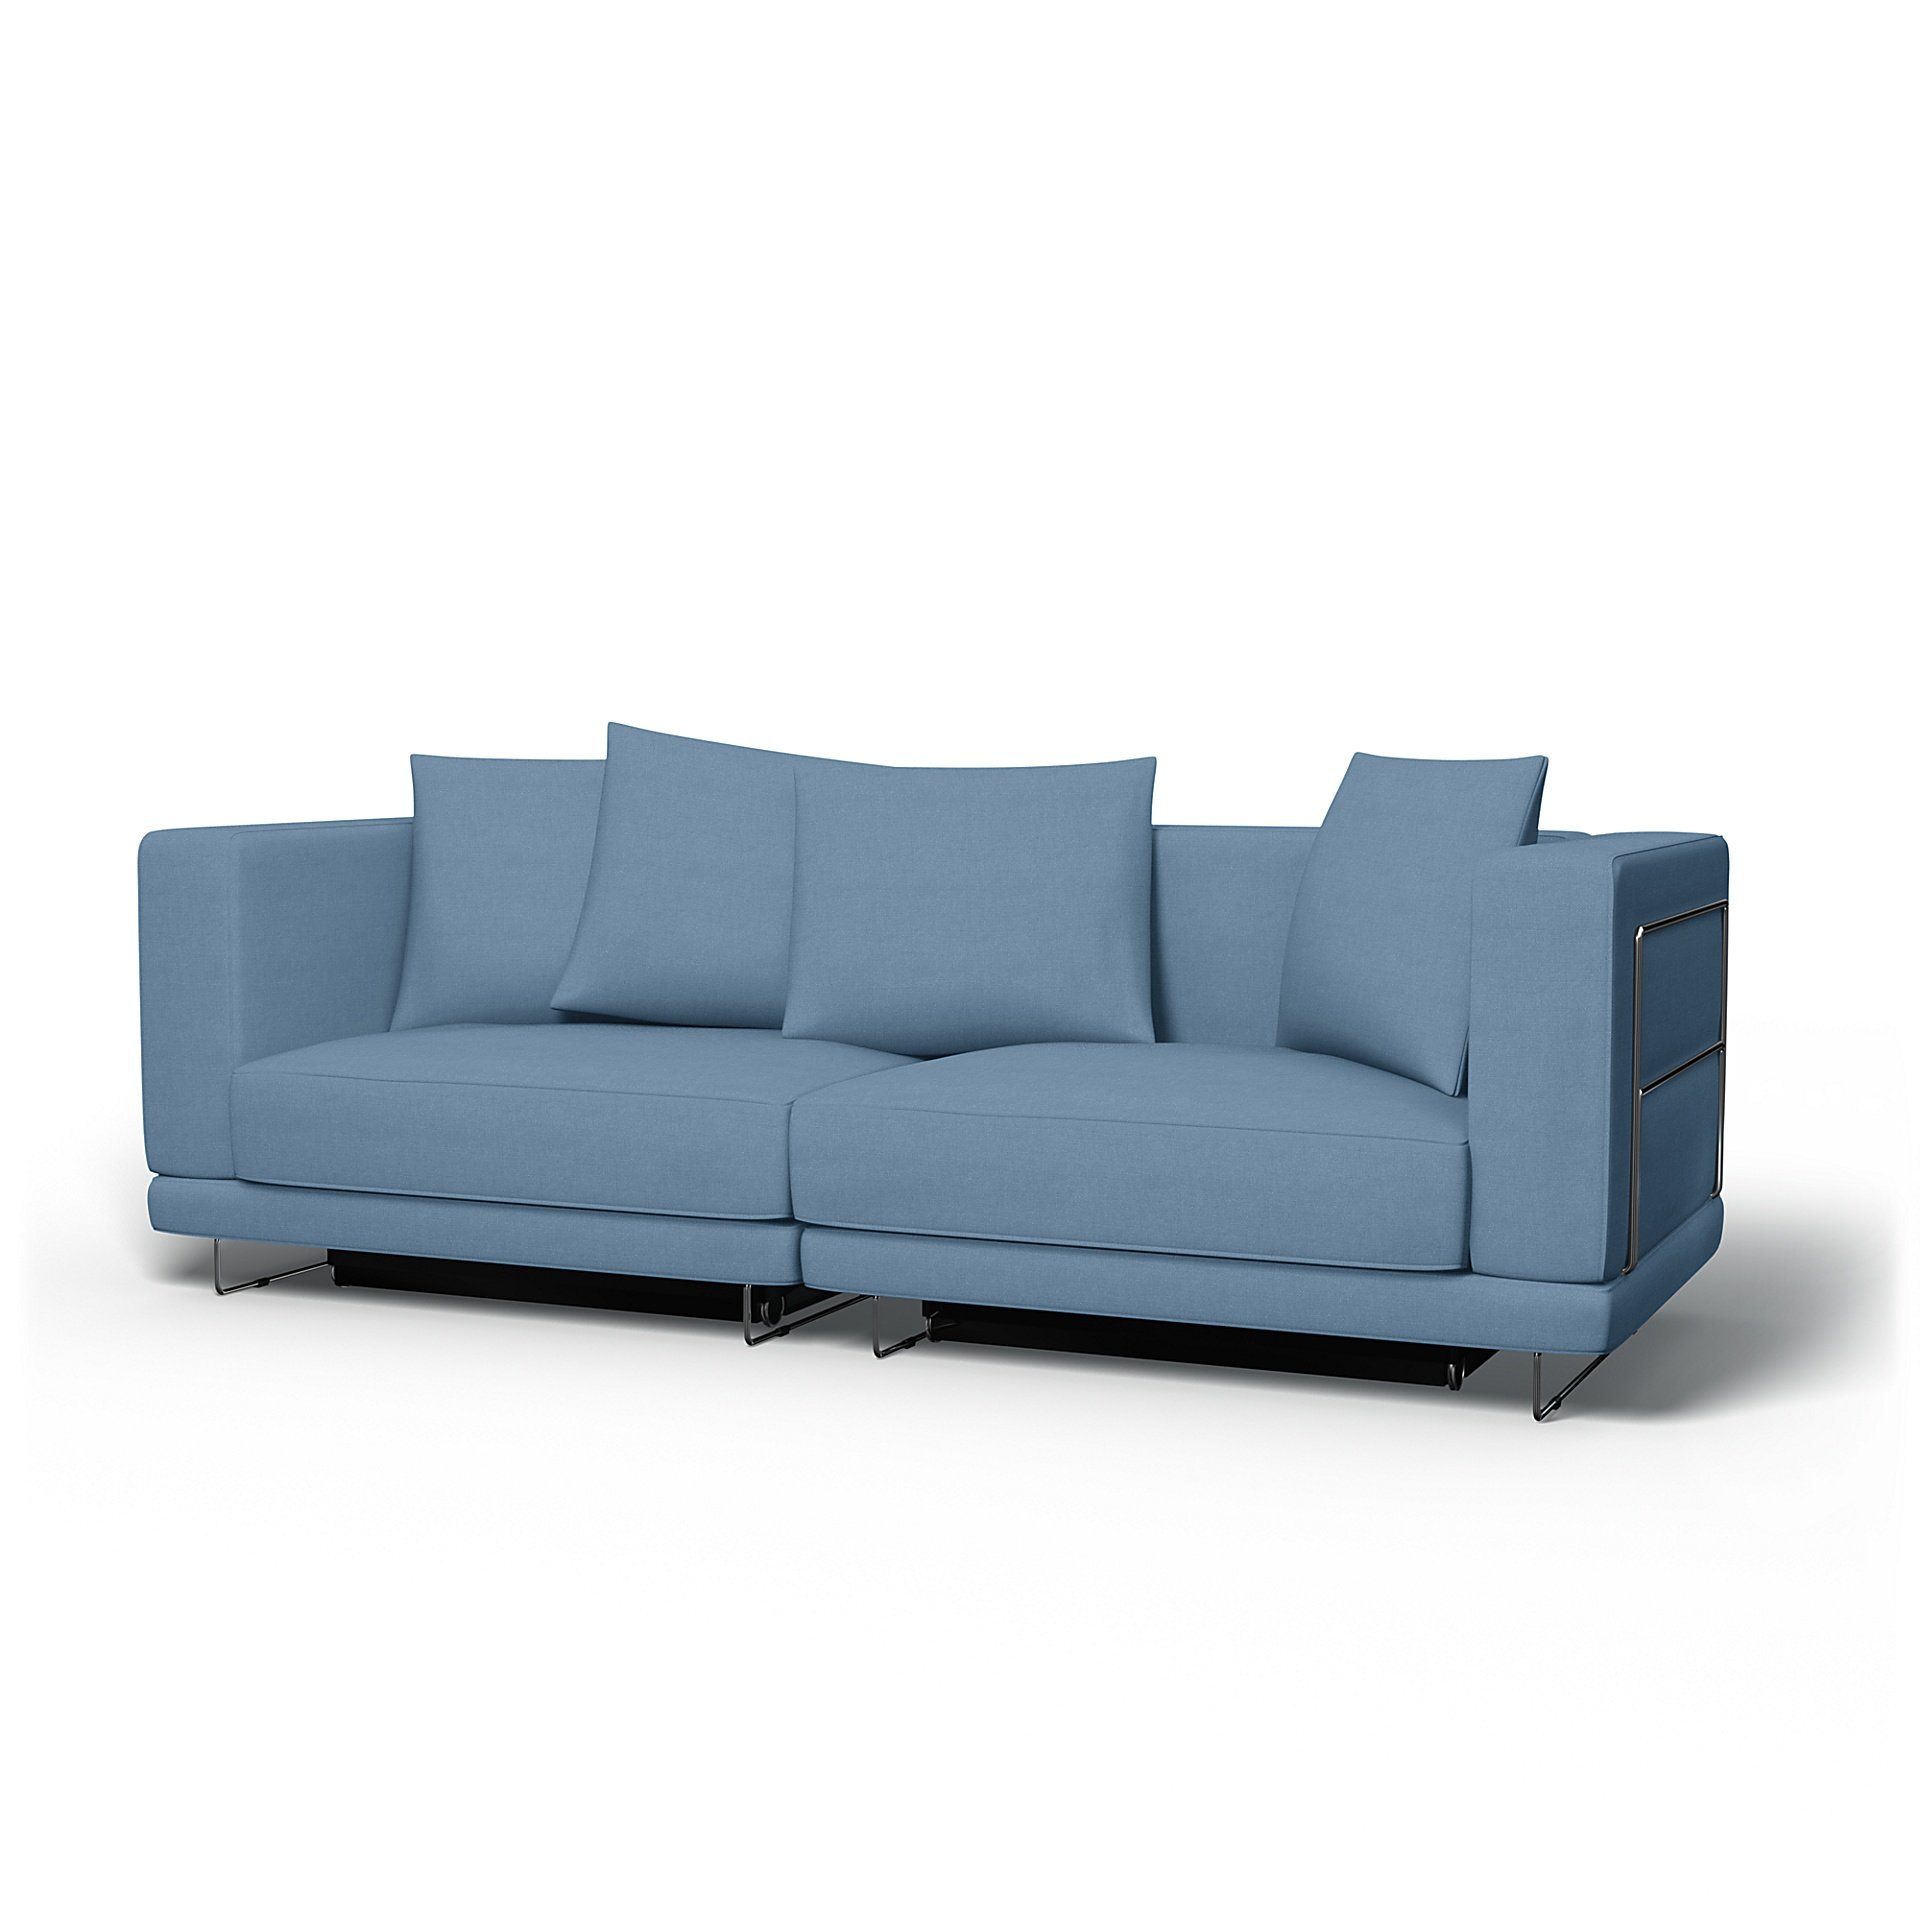 IKEA - Tylosand Sofa Bed Cover, Vintage Blue, Linen - Bemz